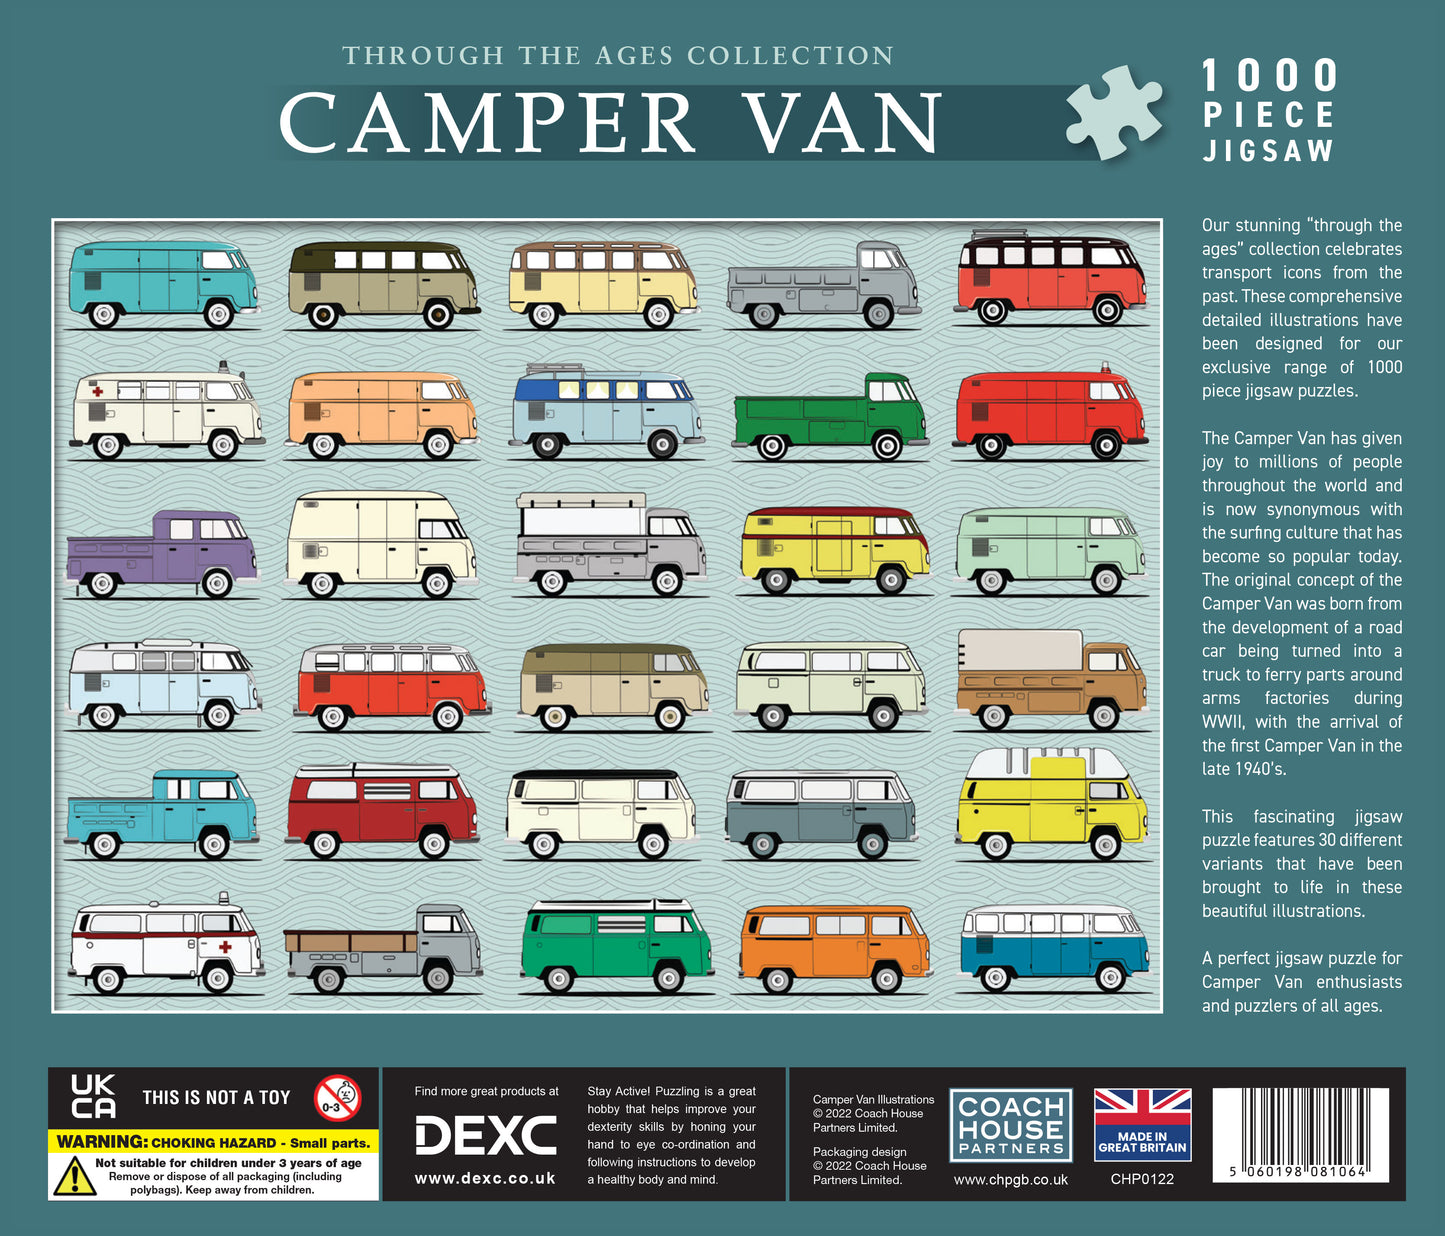 Camper Van 1000 Piece Jigsaw Puzzle